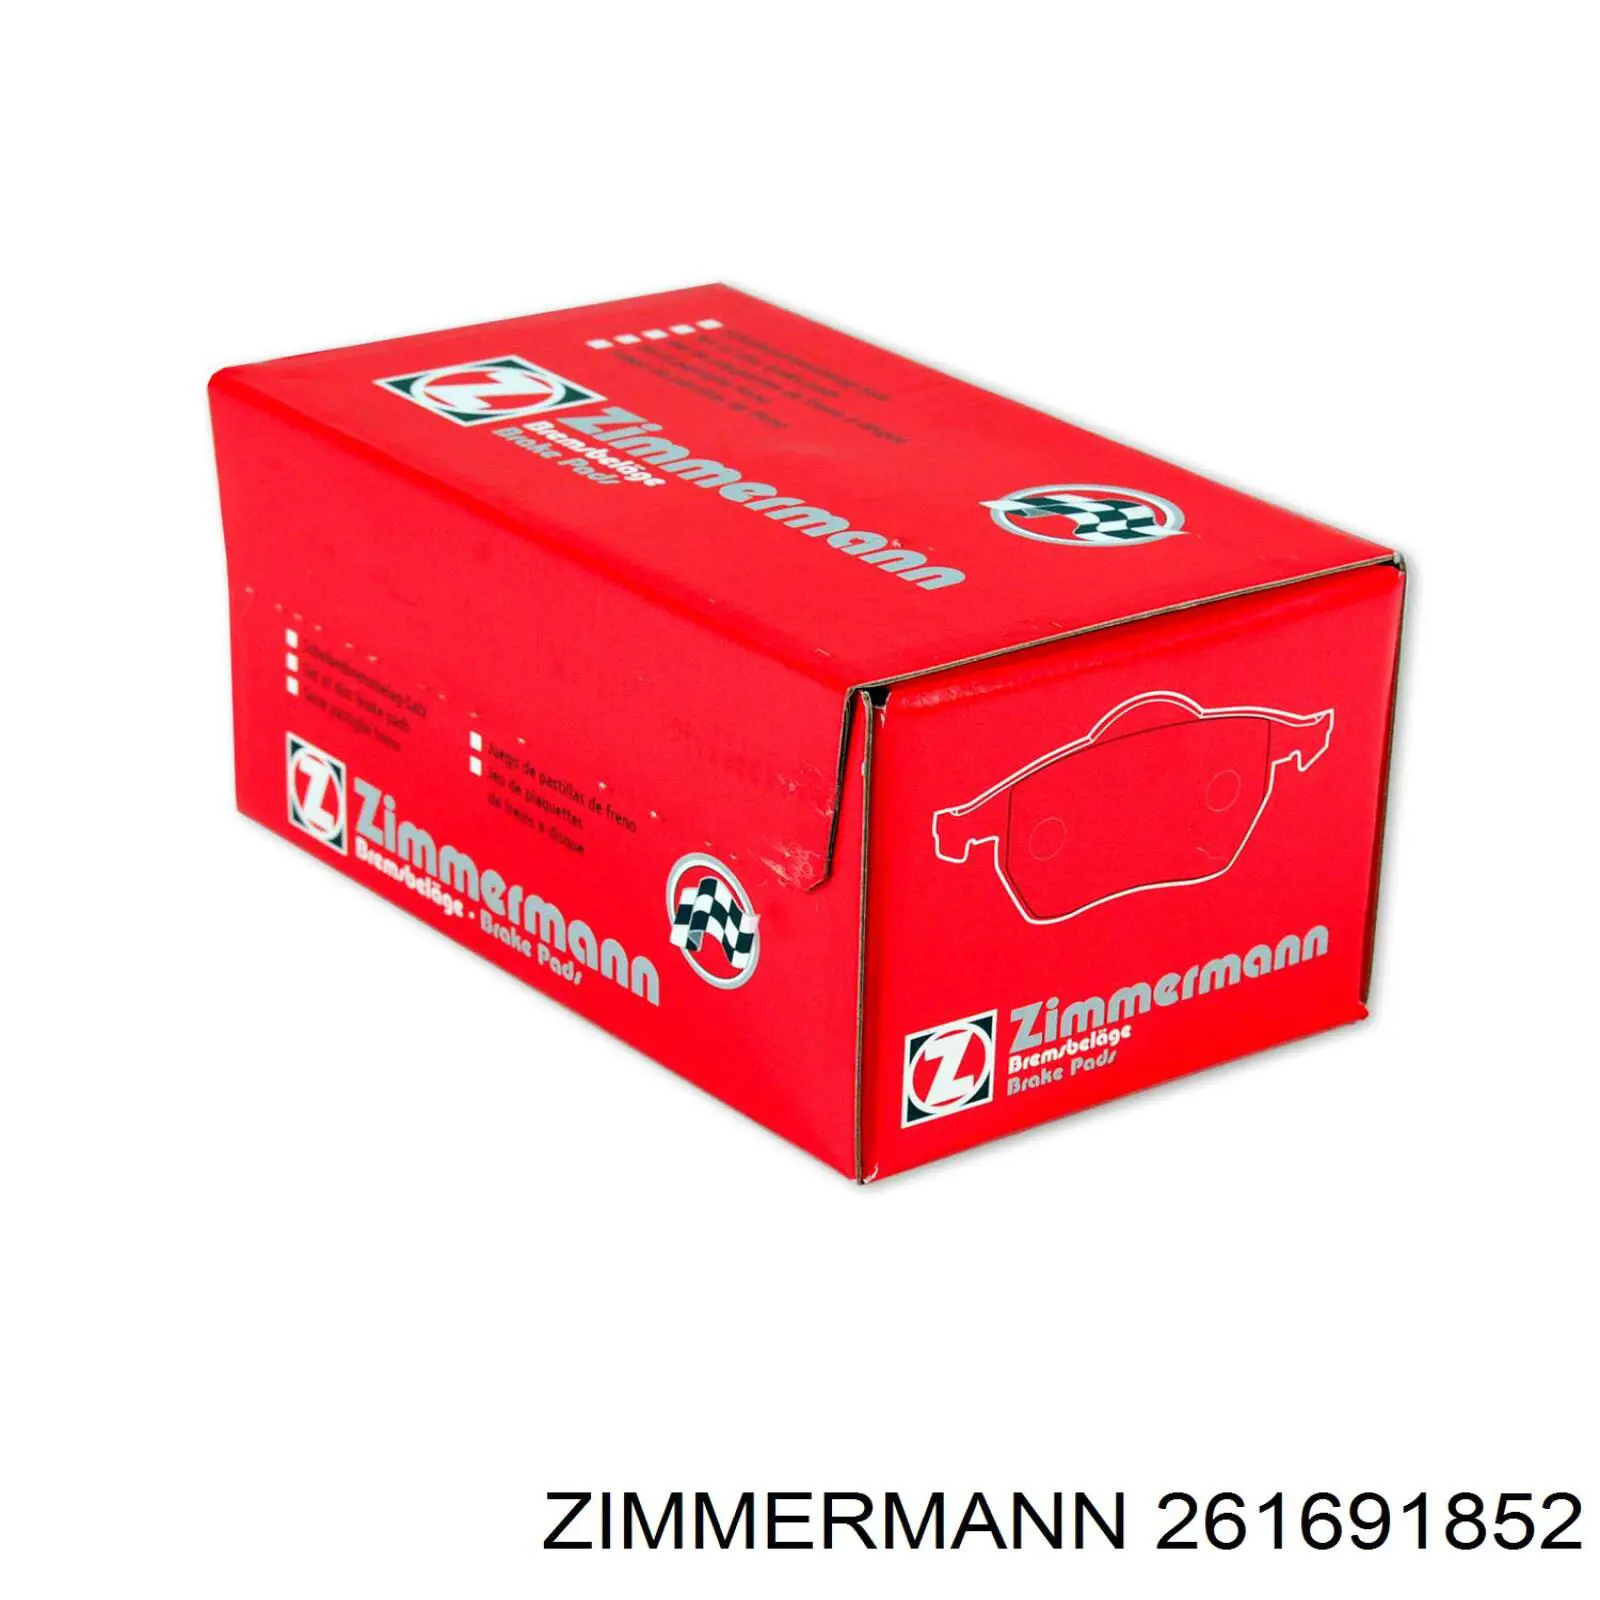 261691852 Zimmermann sapatas do freio dianteiras de disco